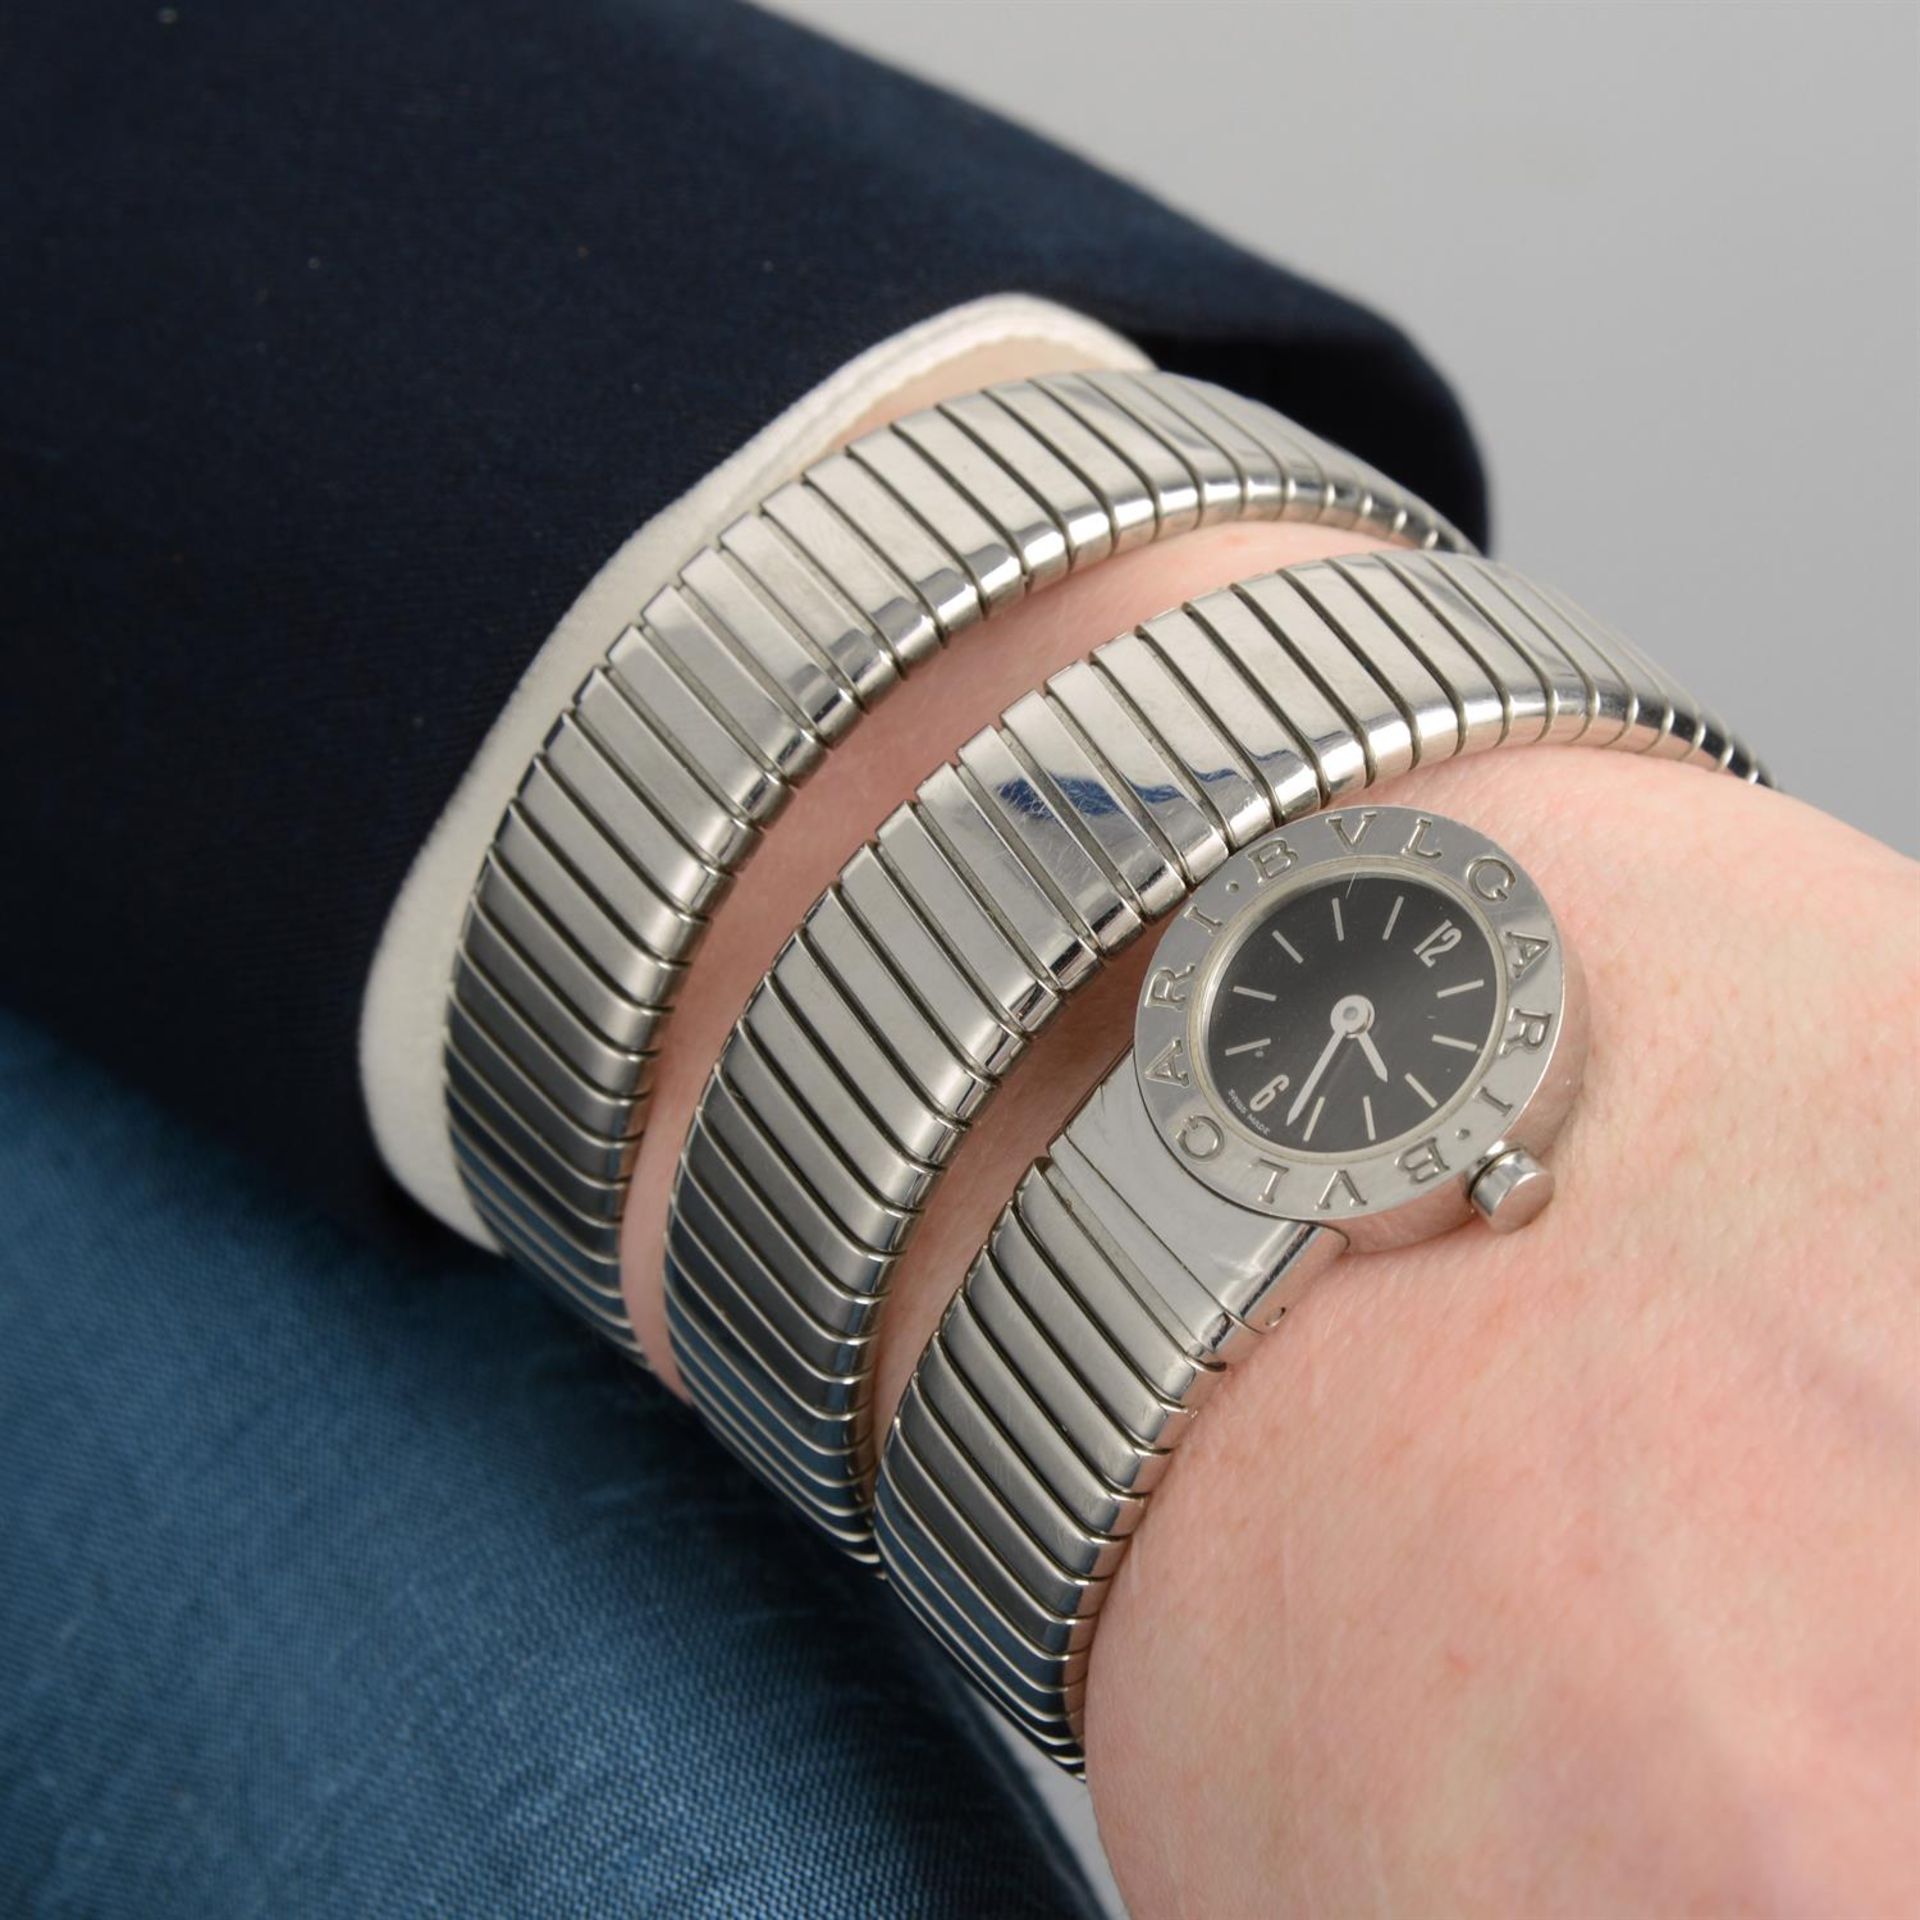 BULGARI - a stainless steel Serpenti bracelet watch, 19mm. - Image 5 of 5